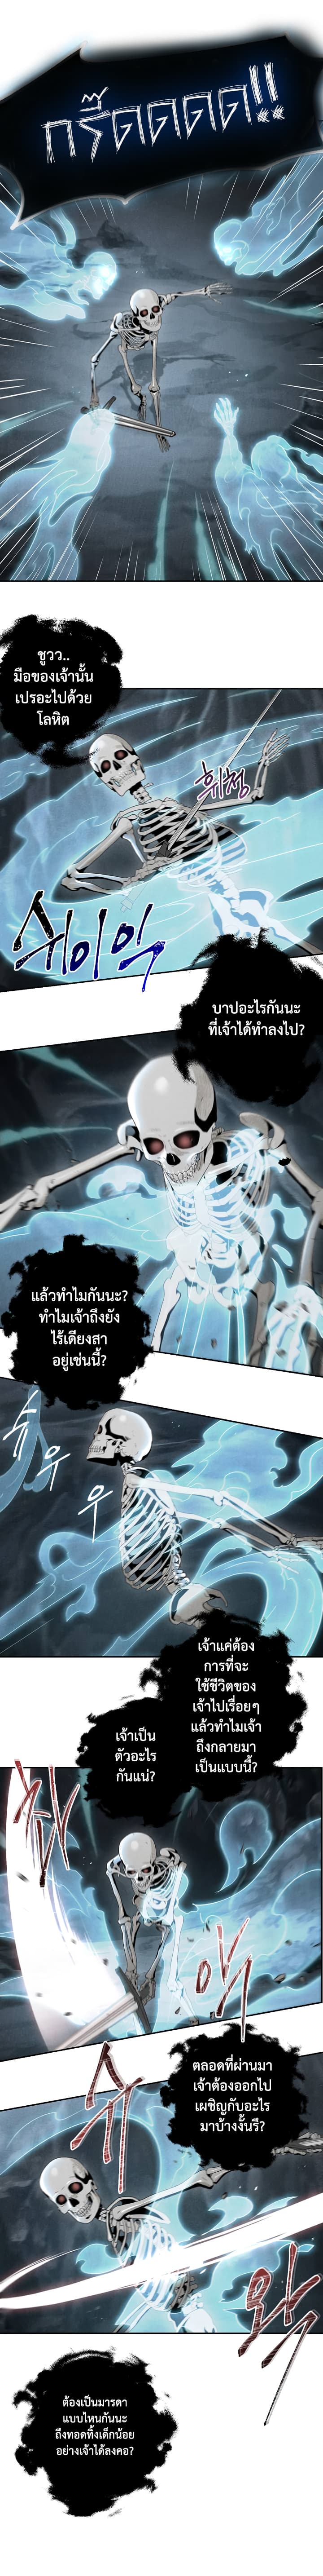 Skeleton Soldier48 (10)